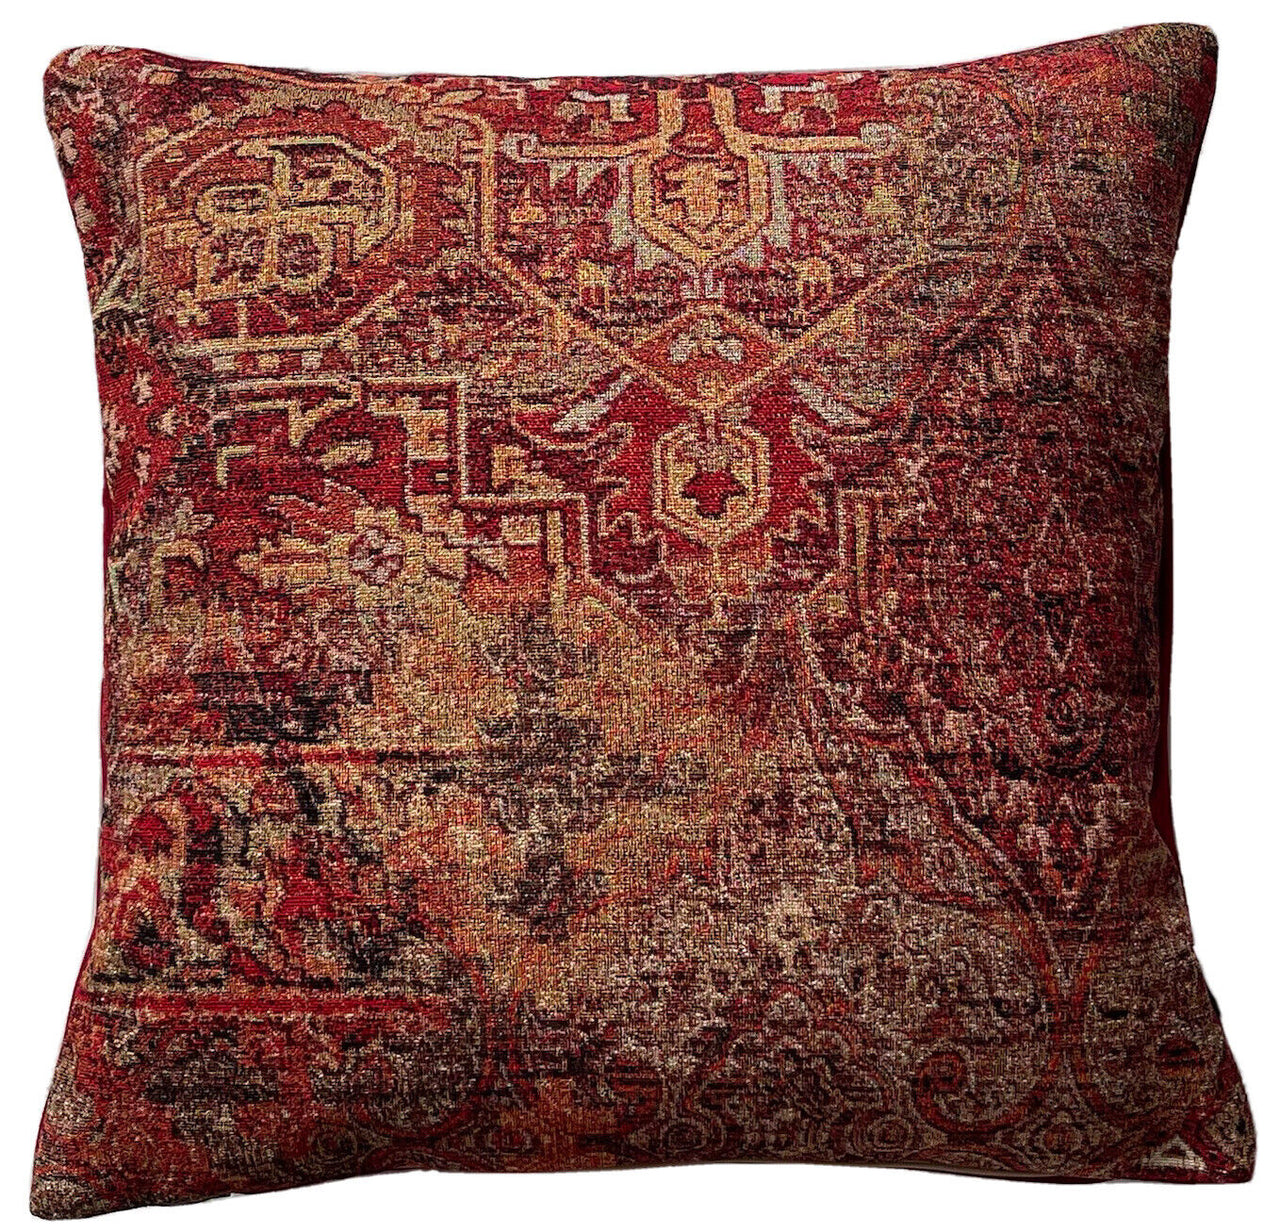 Square kilim style woven cushion cover